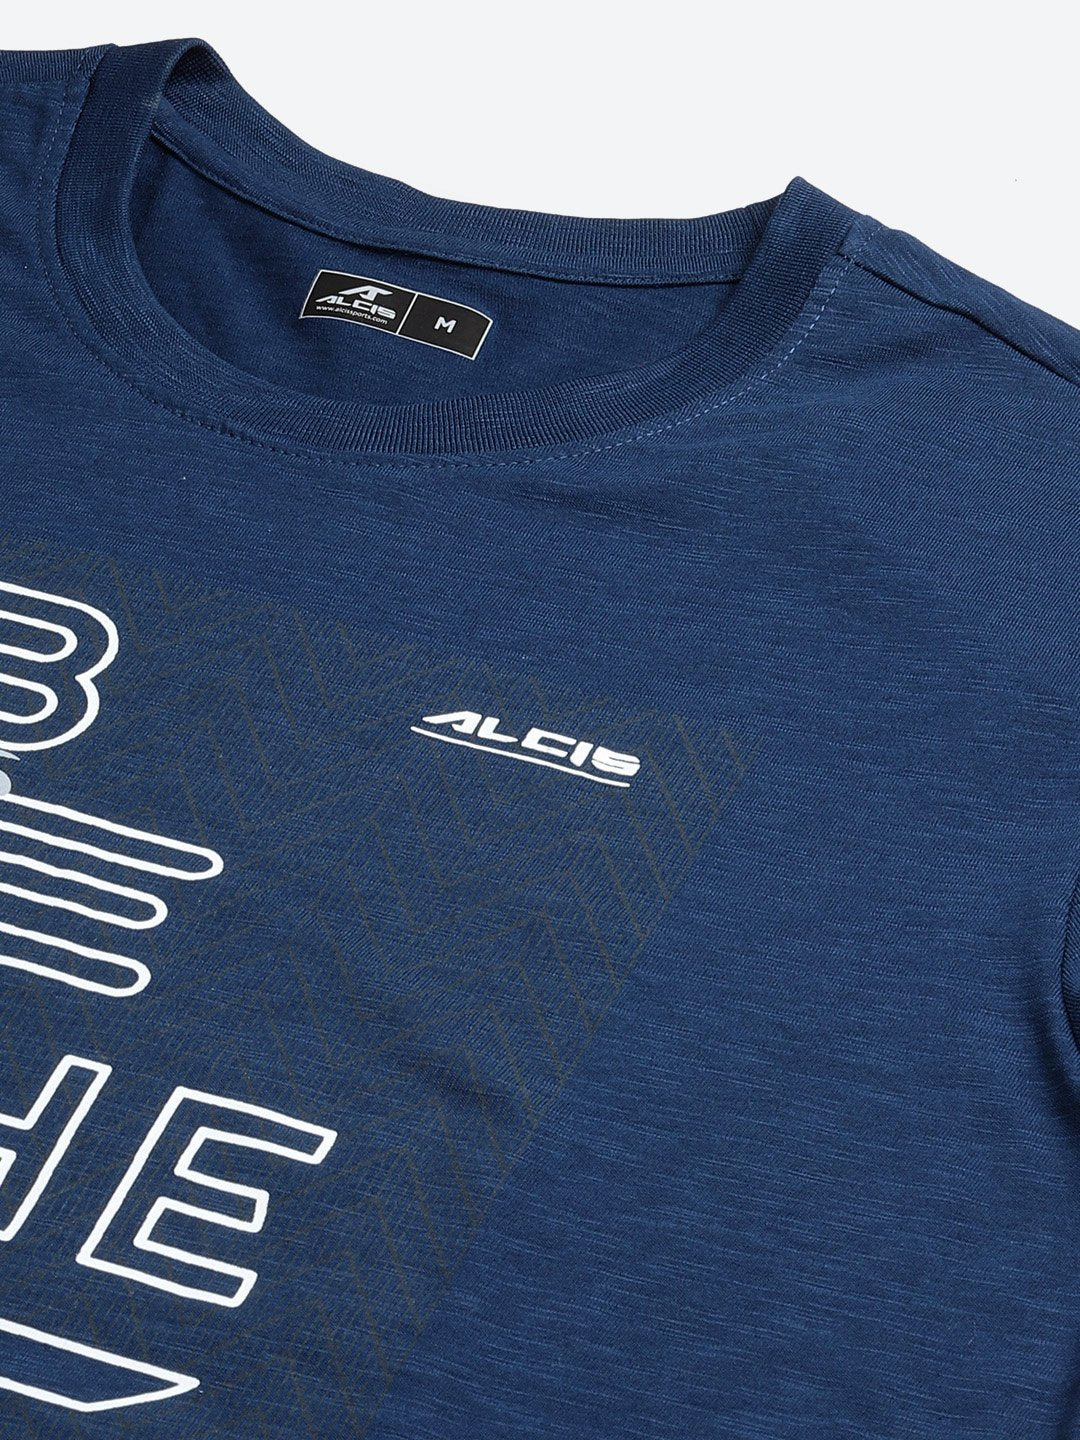 Alcis Men Navy Blue & White Typography Printed Slim Fit T-shirt